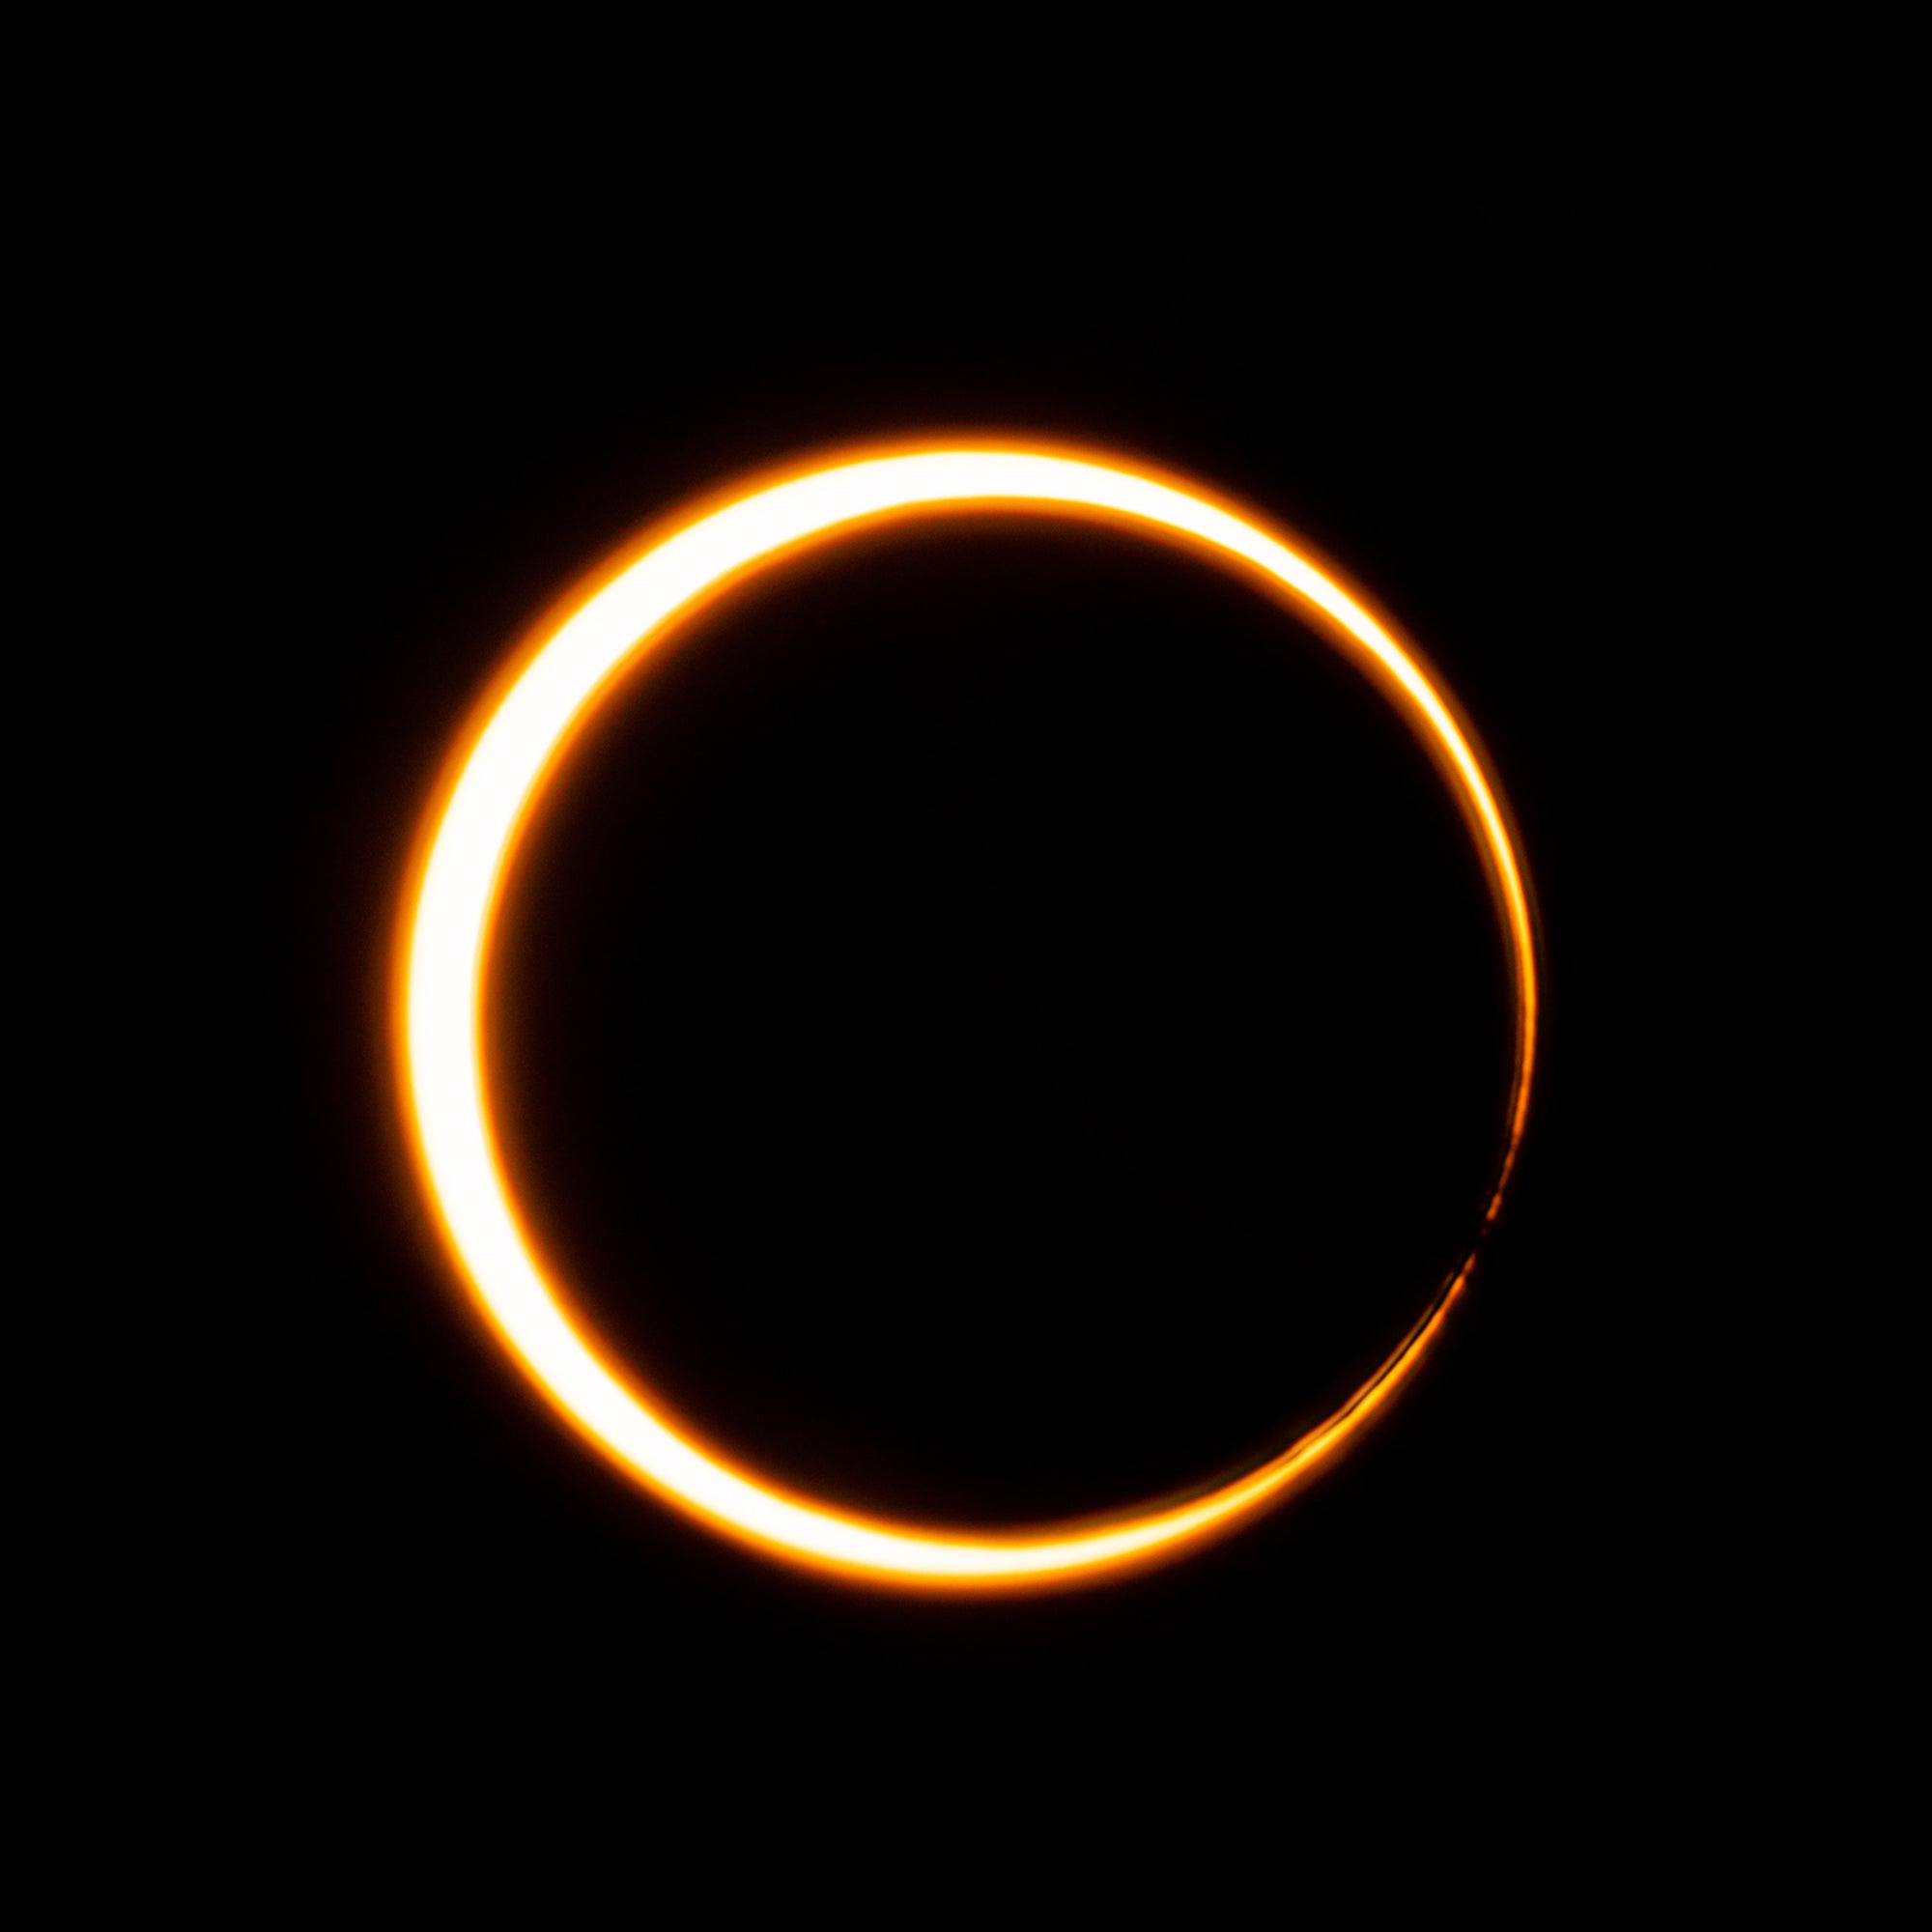 Solar Eclipse Photography